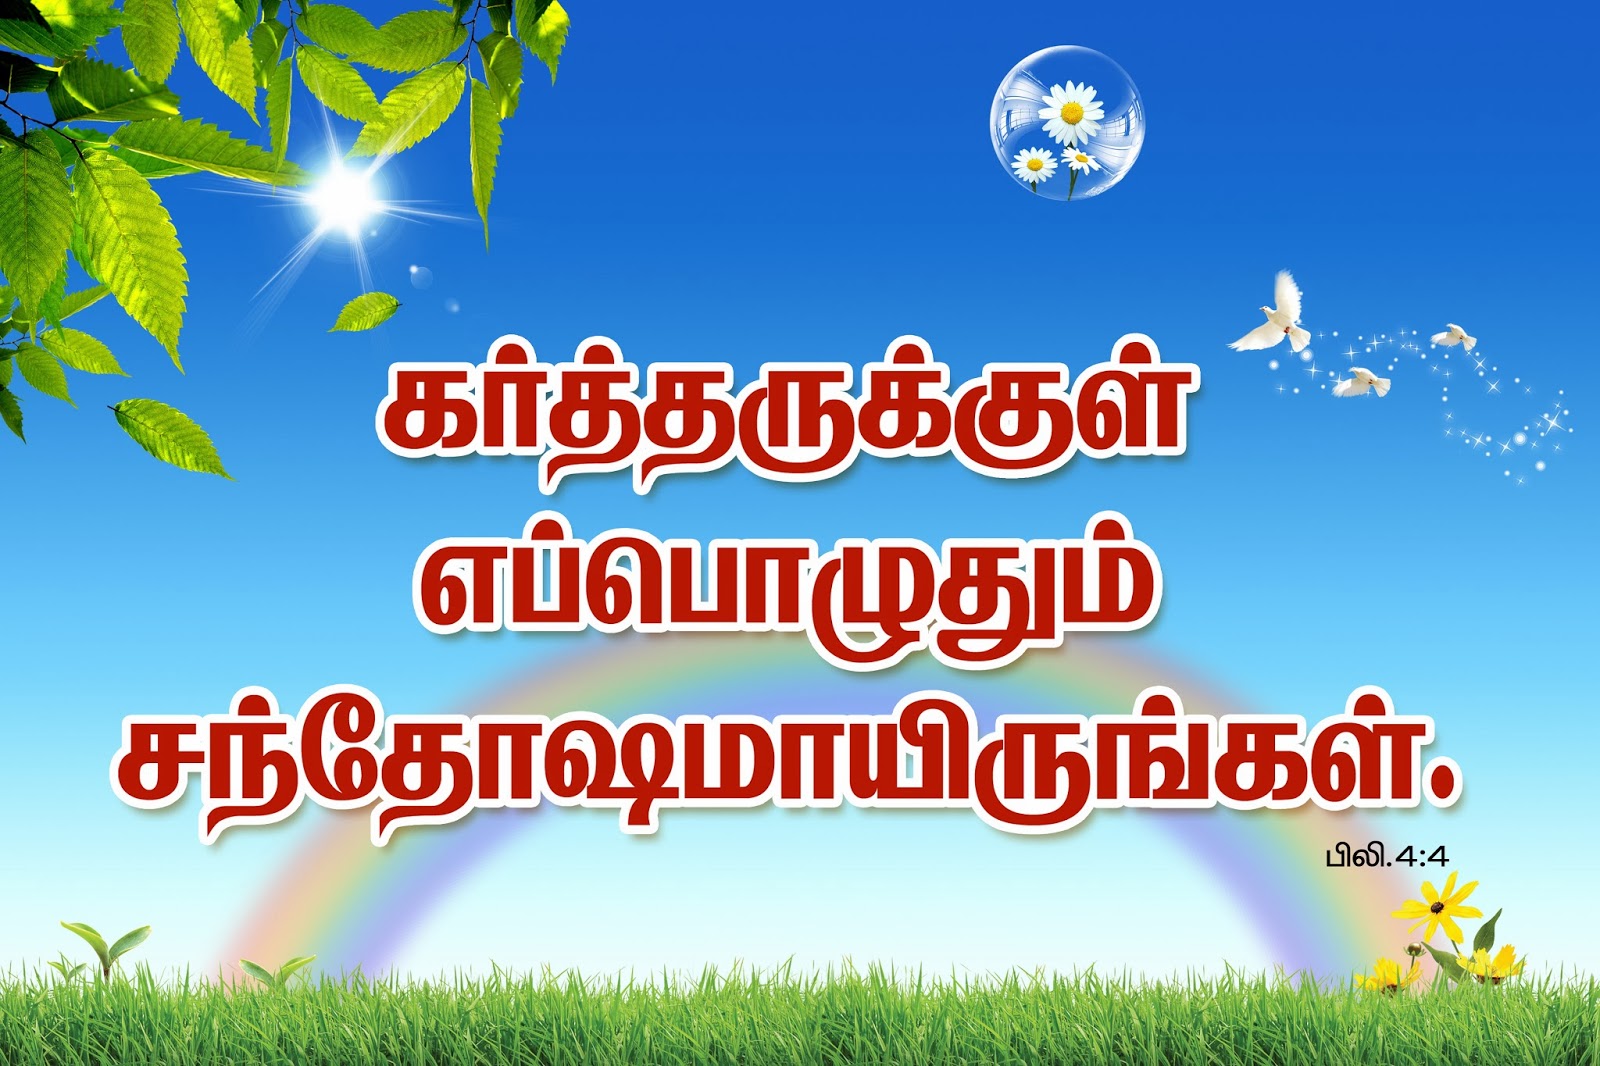 Jesus True Words In Tamil - HD Wallpaper 